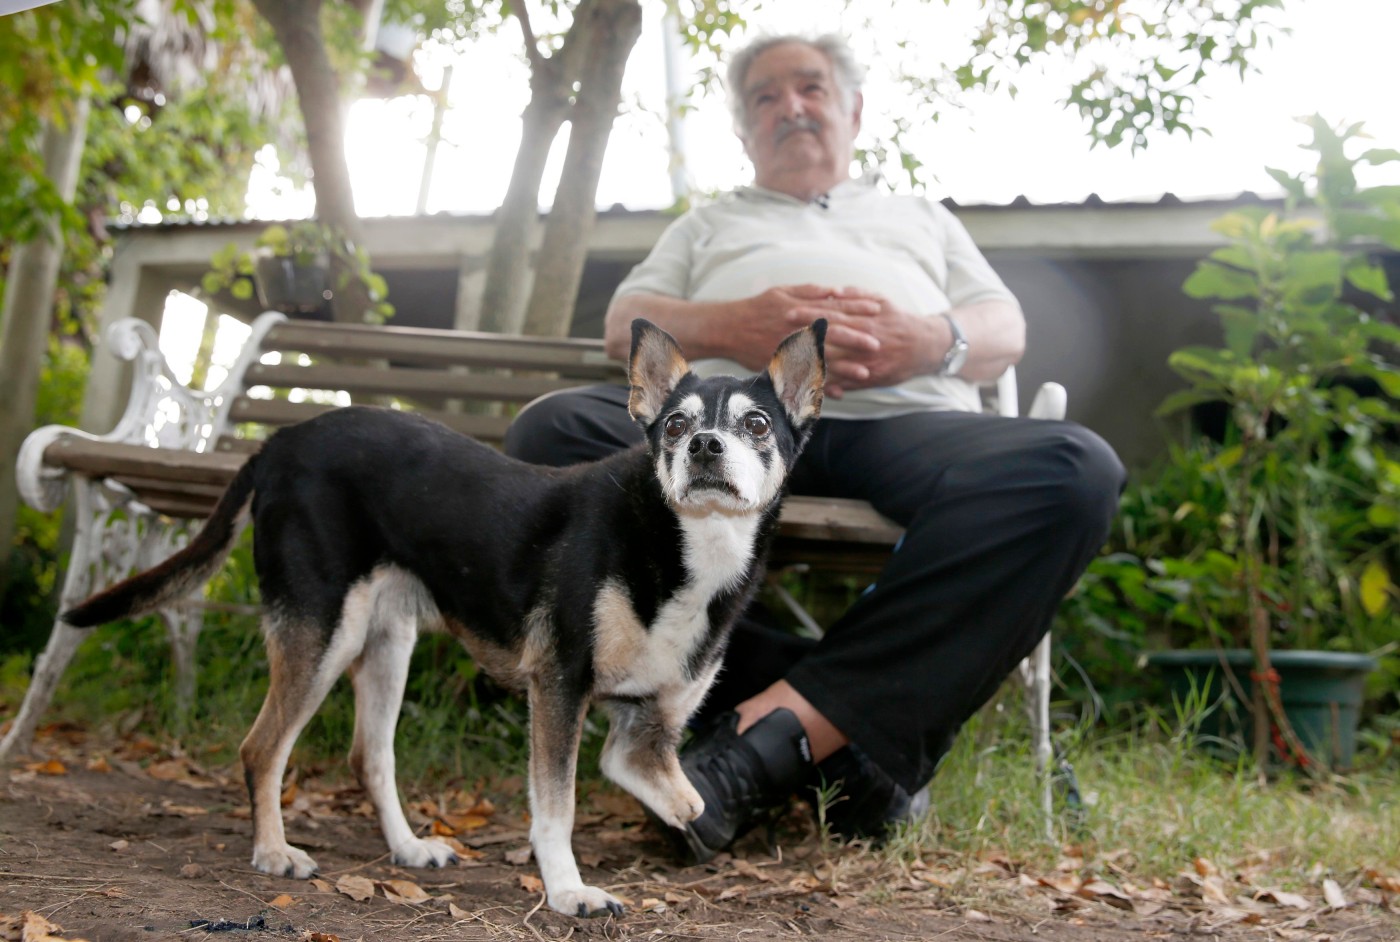 Jose Mujica and Manuela